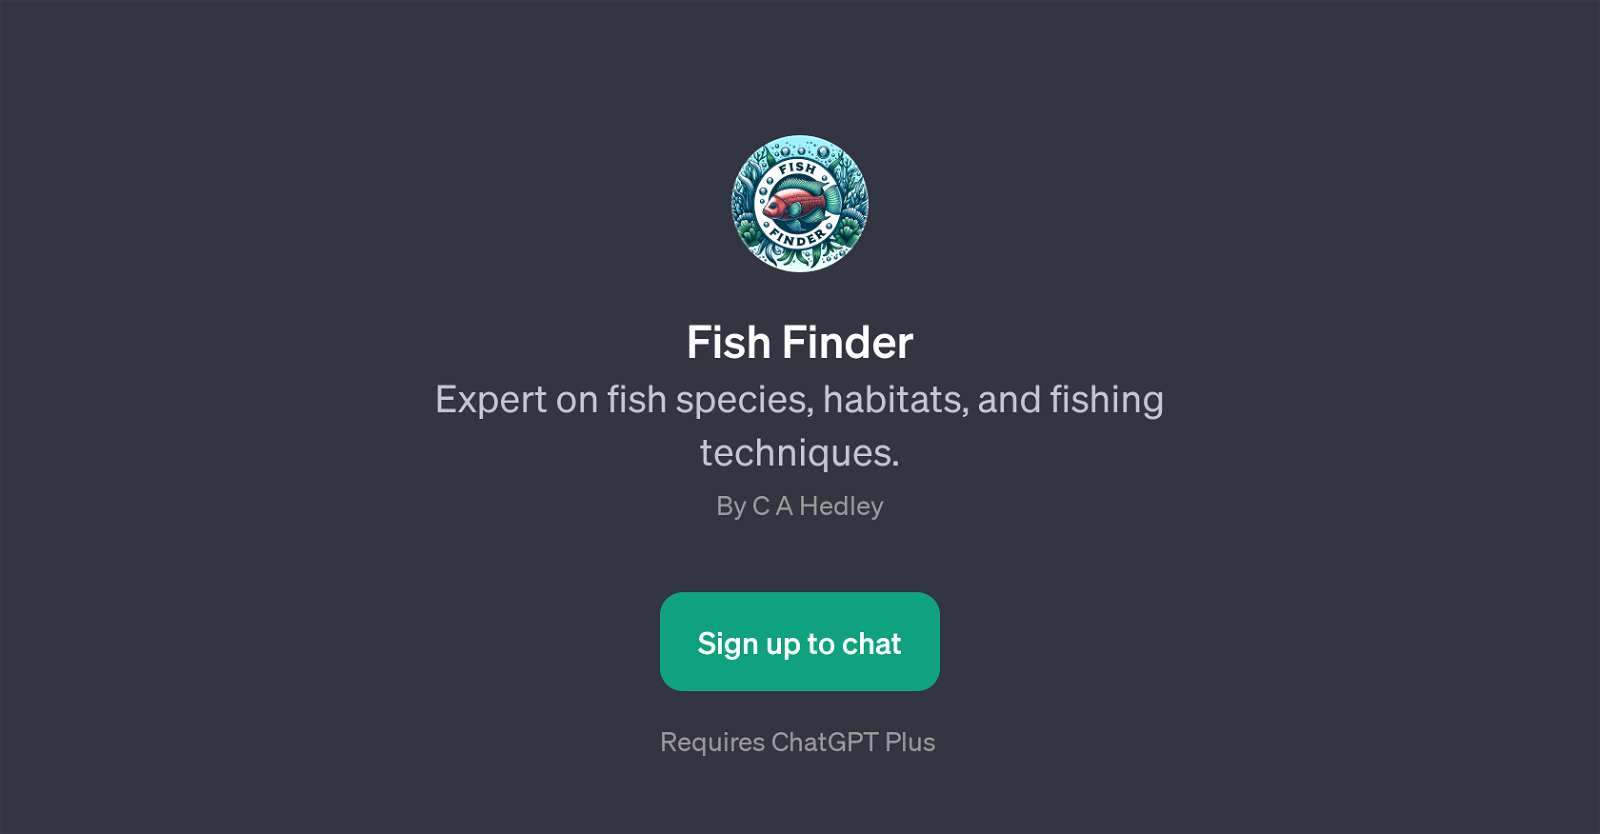 Fish Finder website